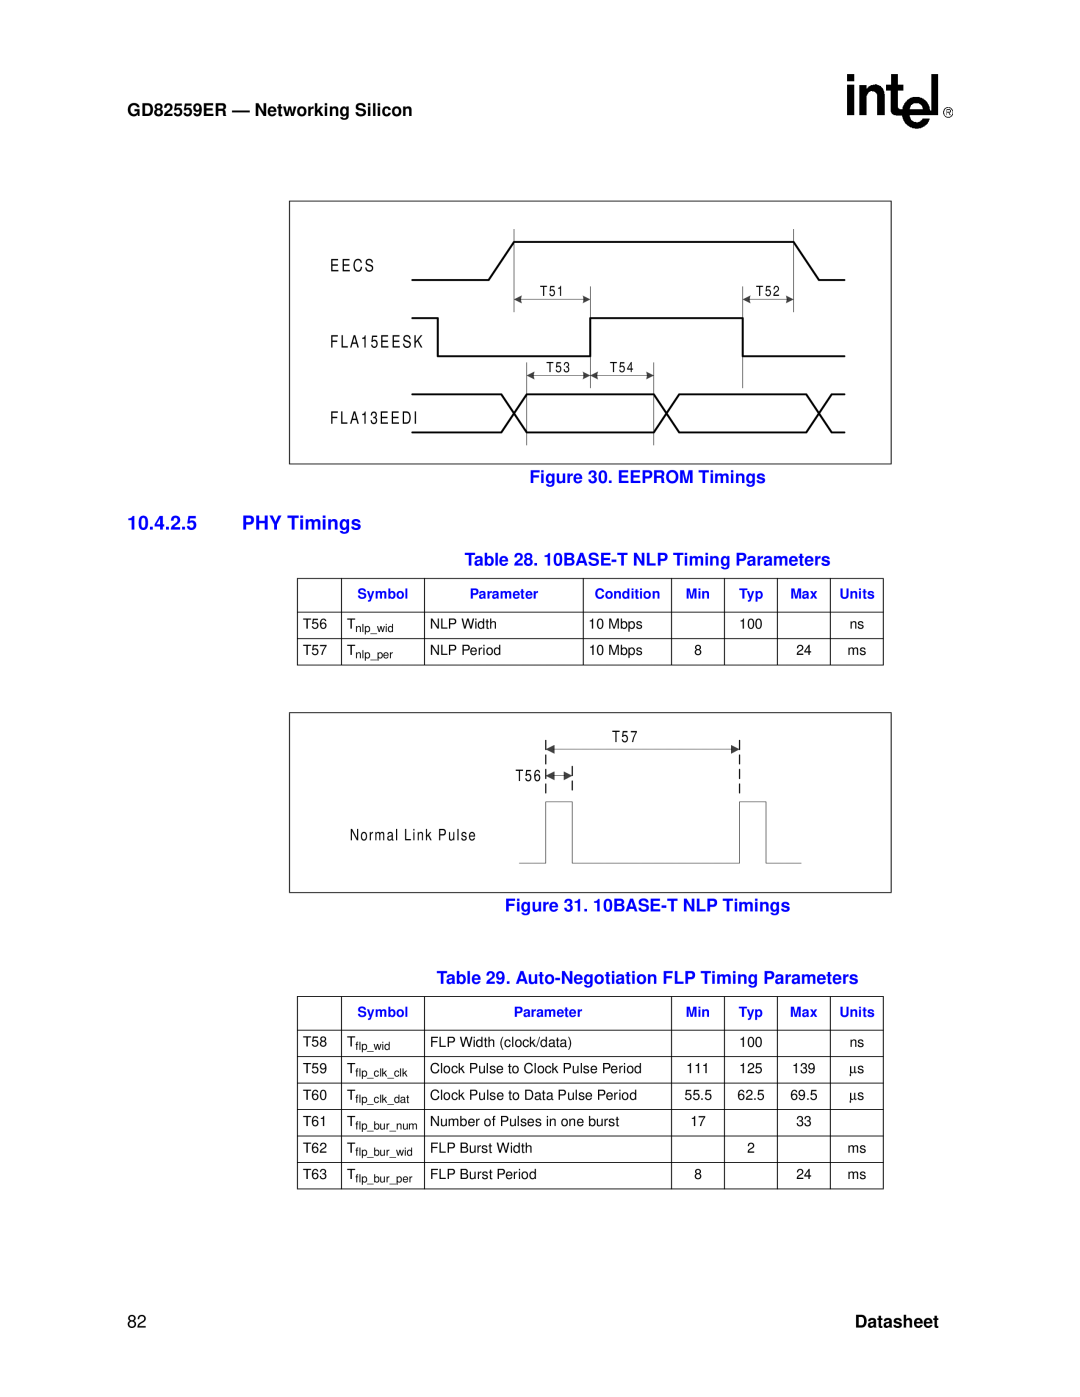 Intel GD82559ER manual PHY Timings, EEPROM Timings, 10BASE-T NLP Timing Parameters, 10BASE-T NLP Timings, Datasheet 